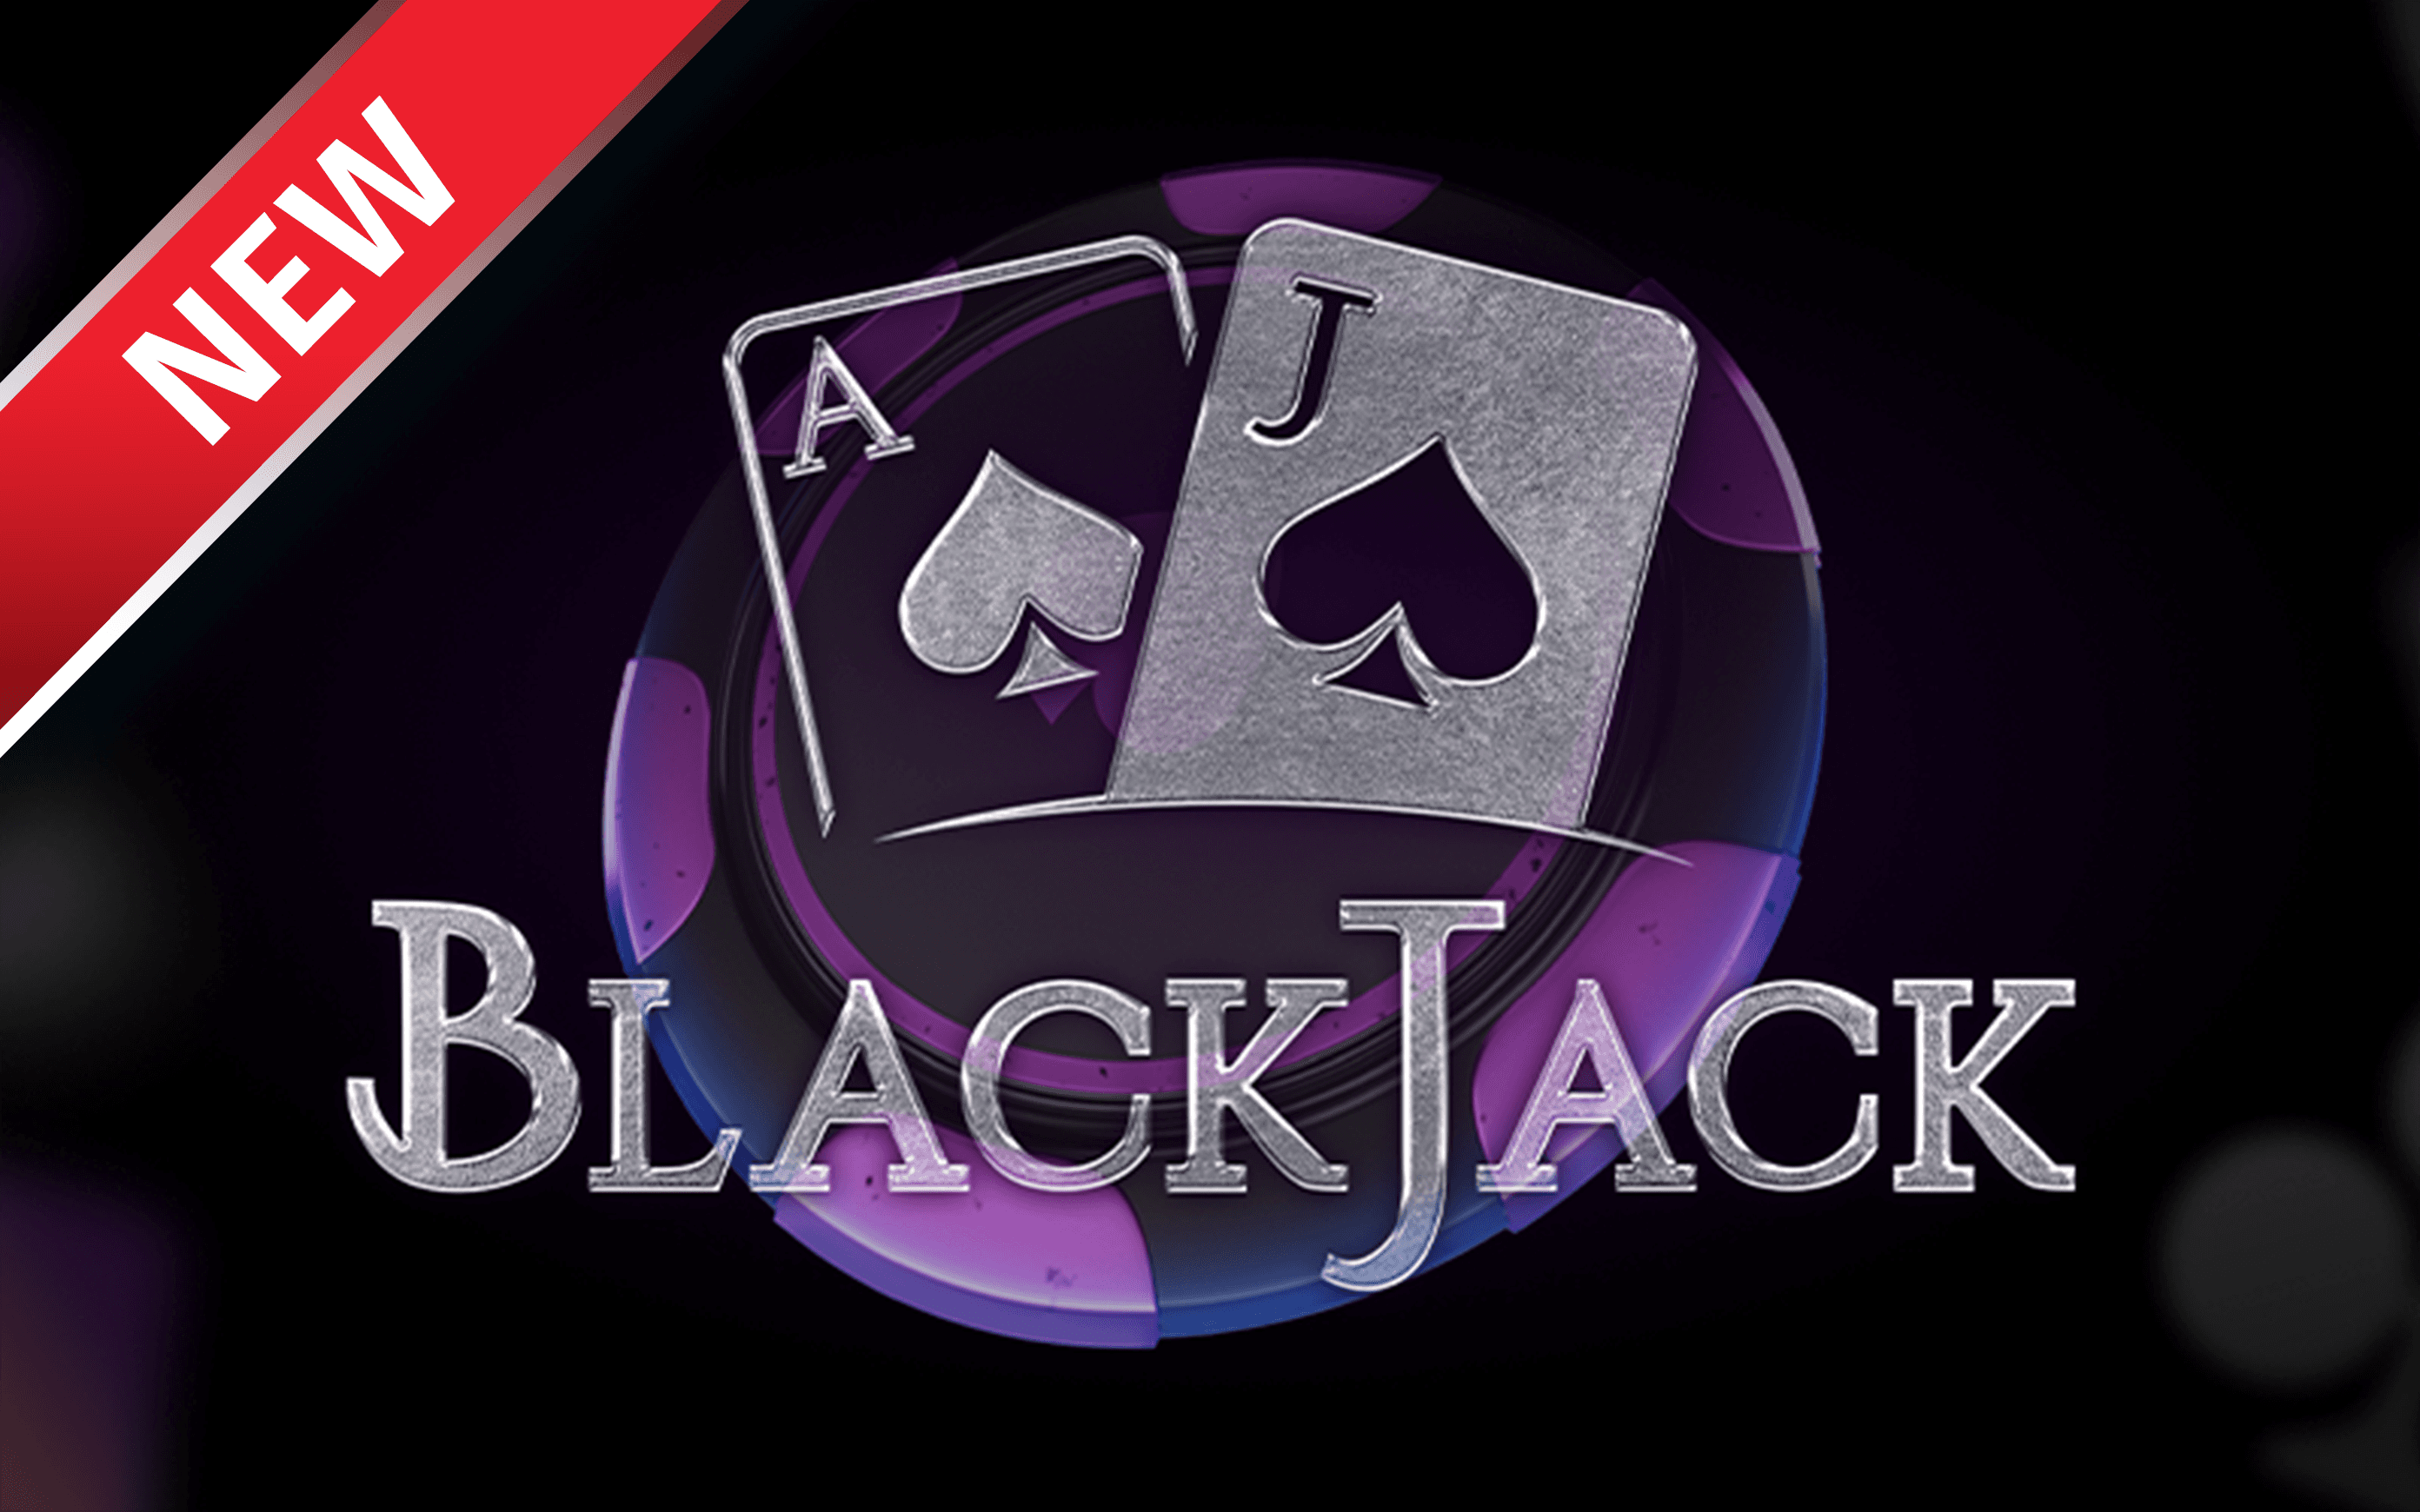 Joacă BlackJack în cazinoul online Starcasino.be